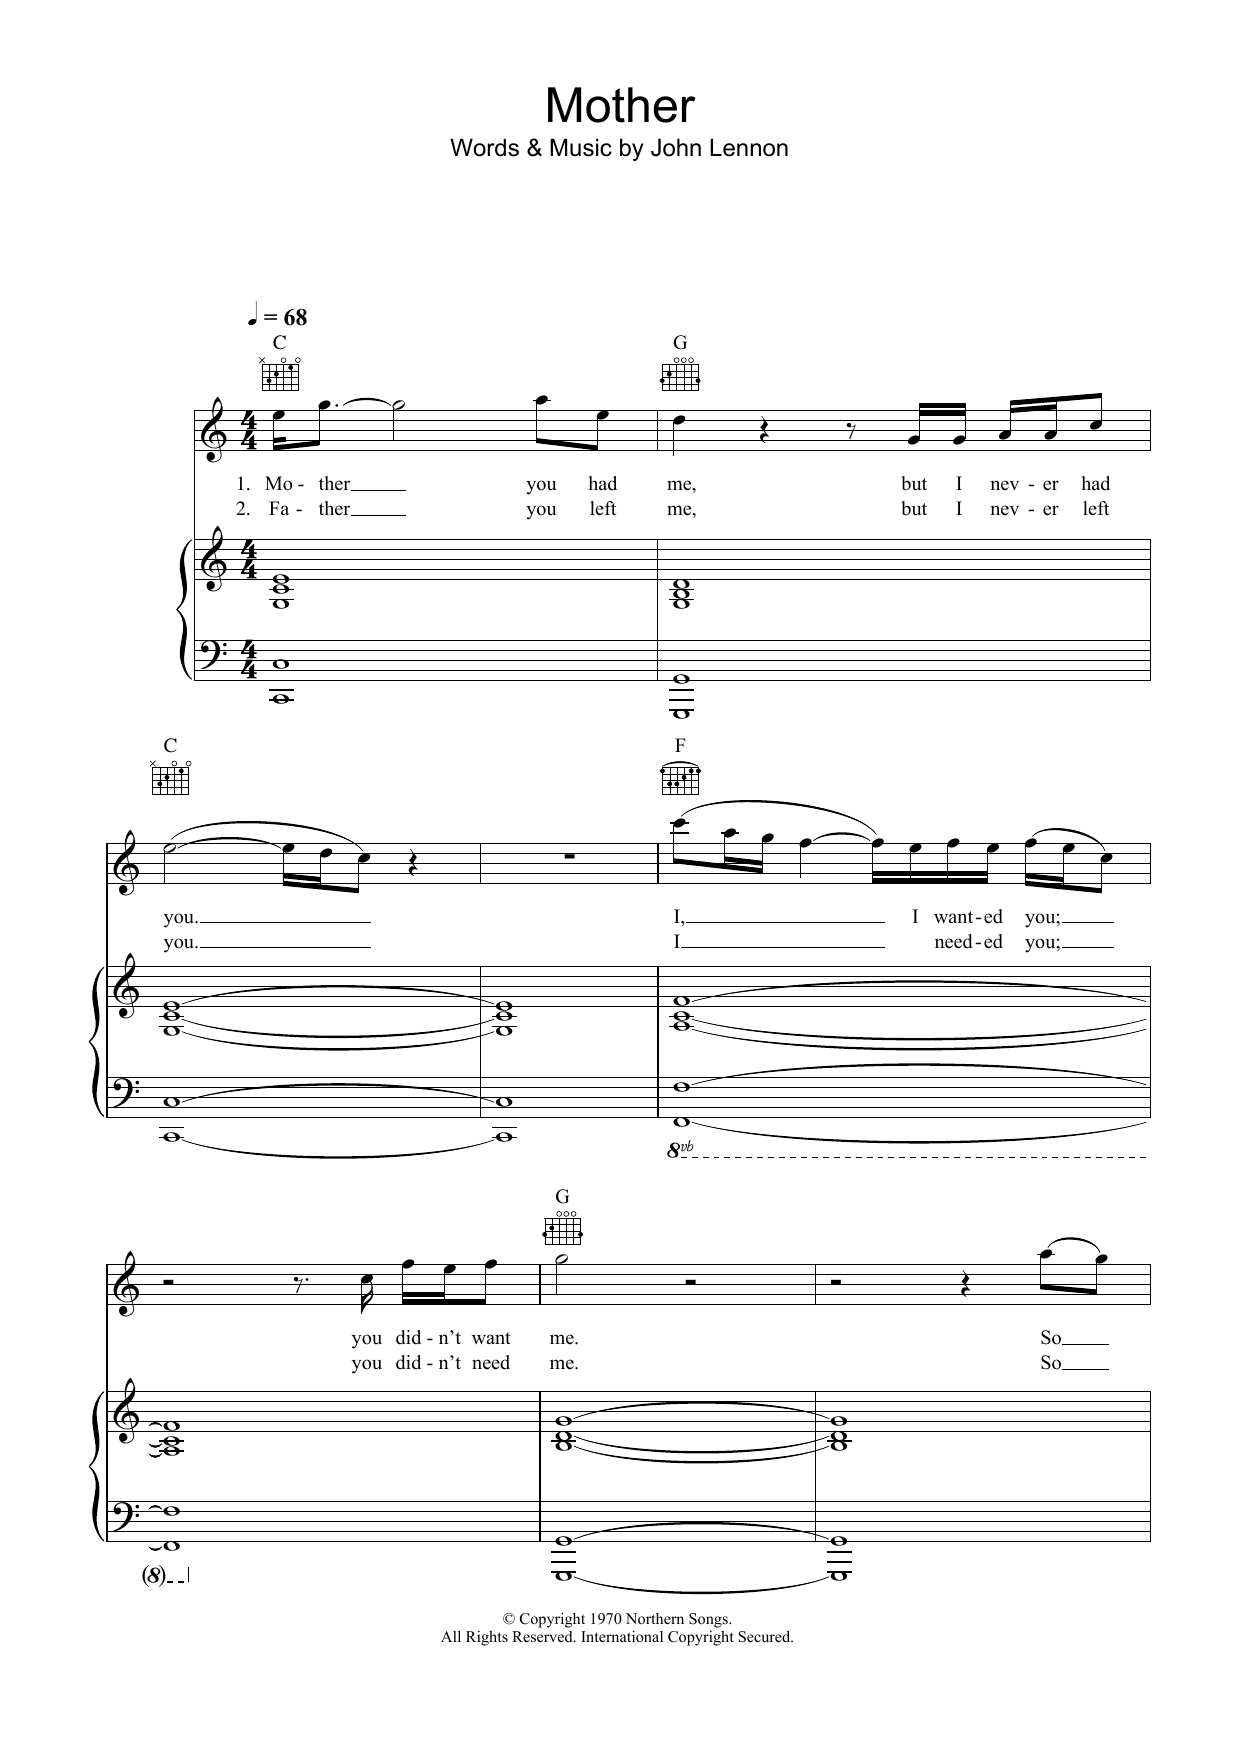 John Lennon Mother Sheet Music Notes & Chords for Ukulele - Download or Print PDF